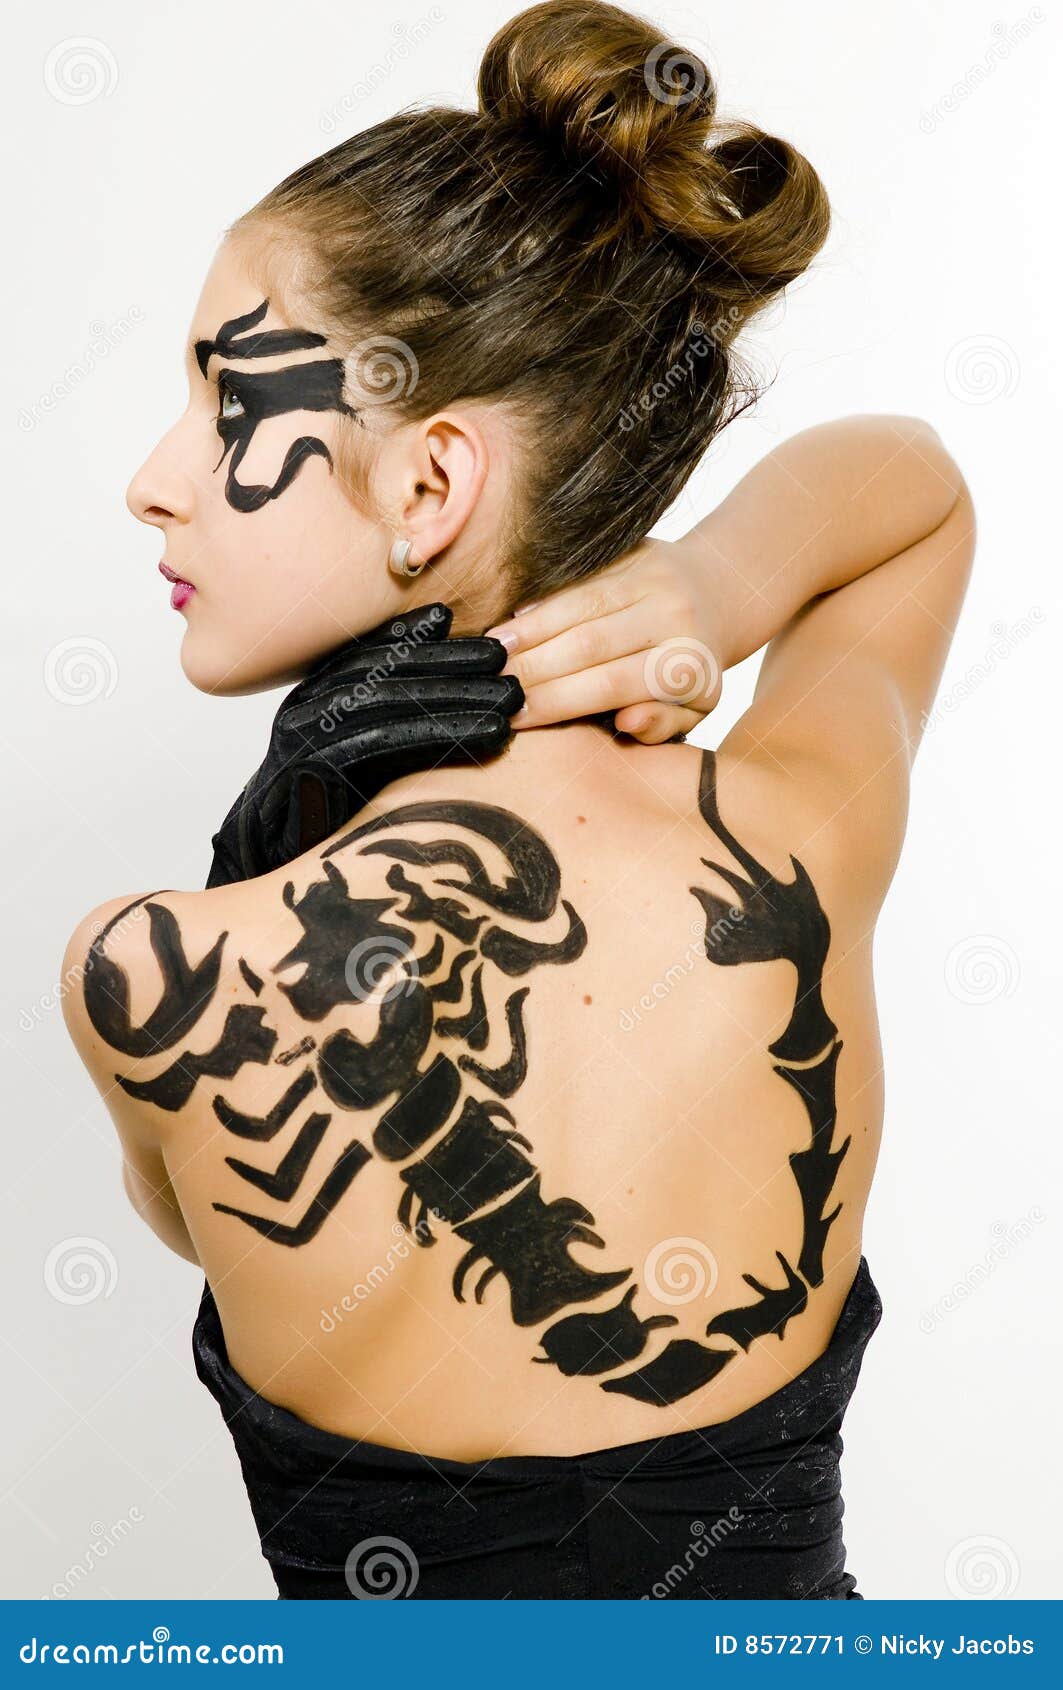 scorpion-tattoo-on-girl-chest | Usman Sadiq | Flickr